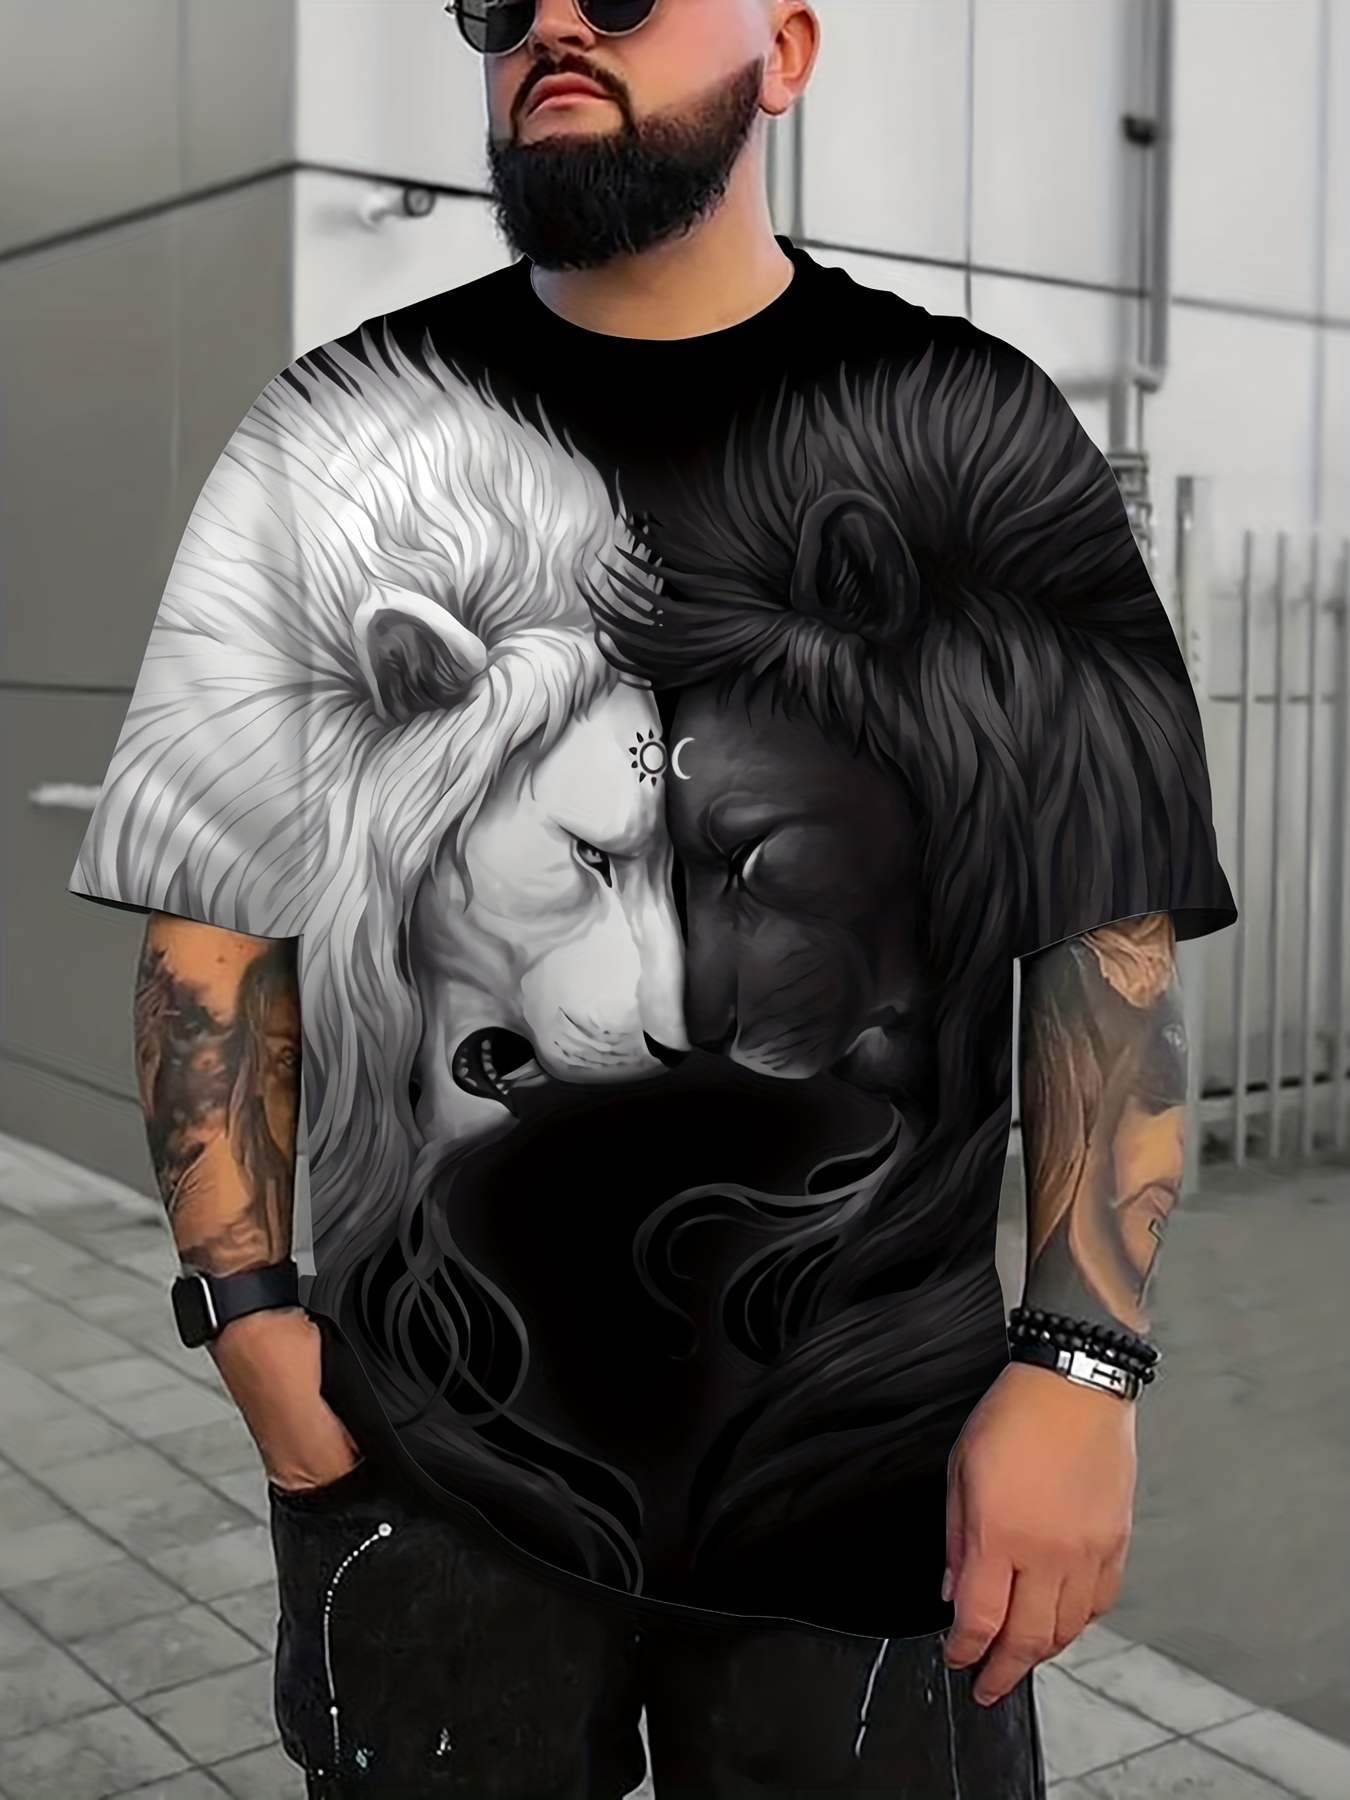 Men 3D Muscle Tattoo Print T-Shirt Short Sleeve Digital Printing T Shirt US